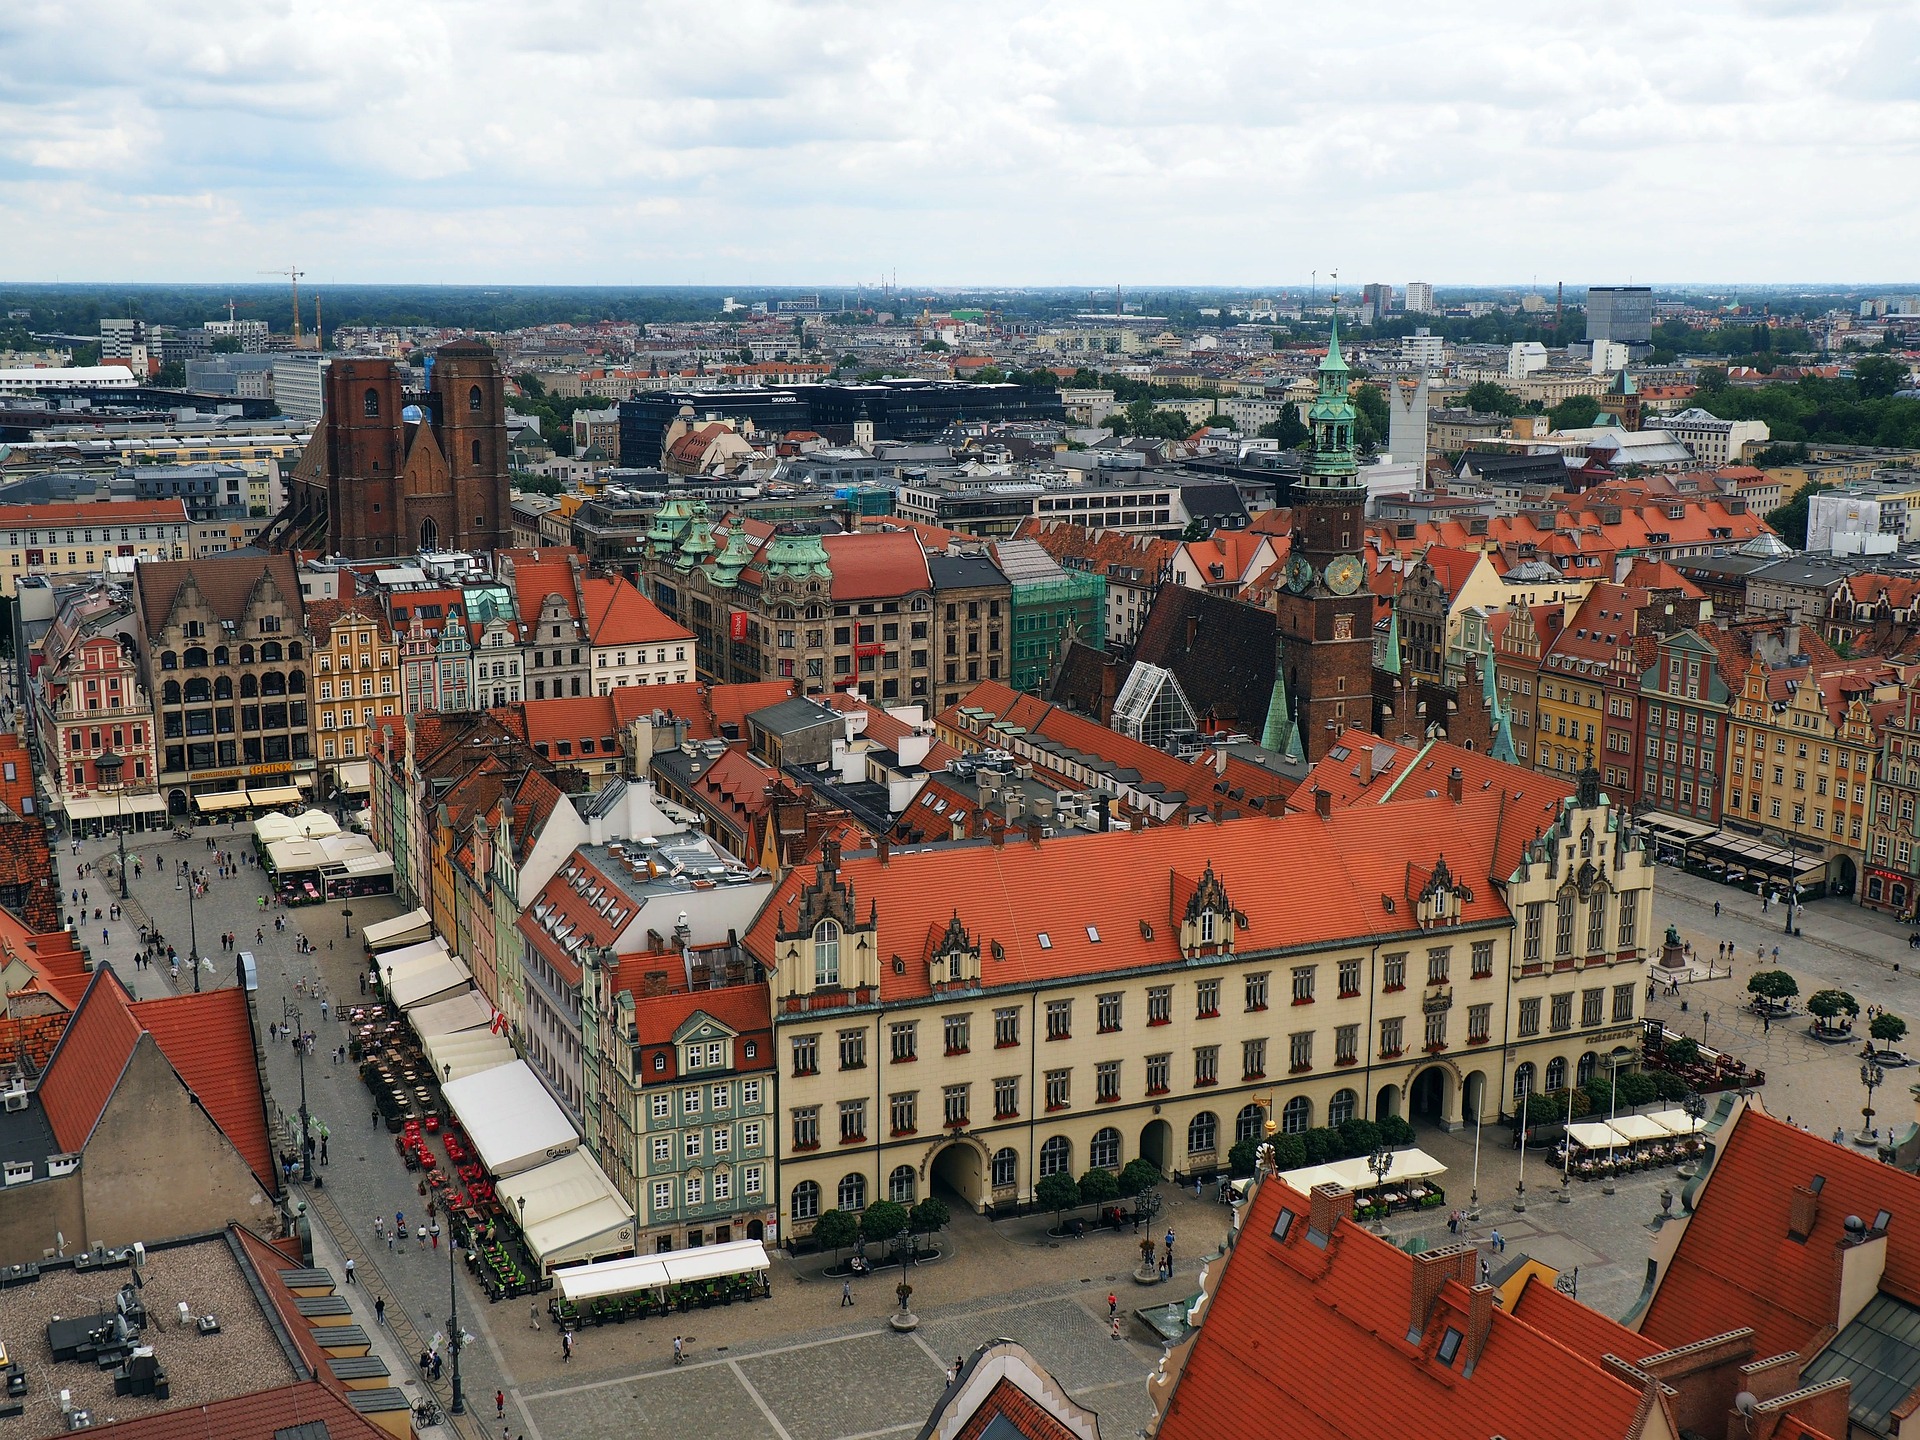 Wrocław's UNESCO World Heritage Sites